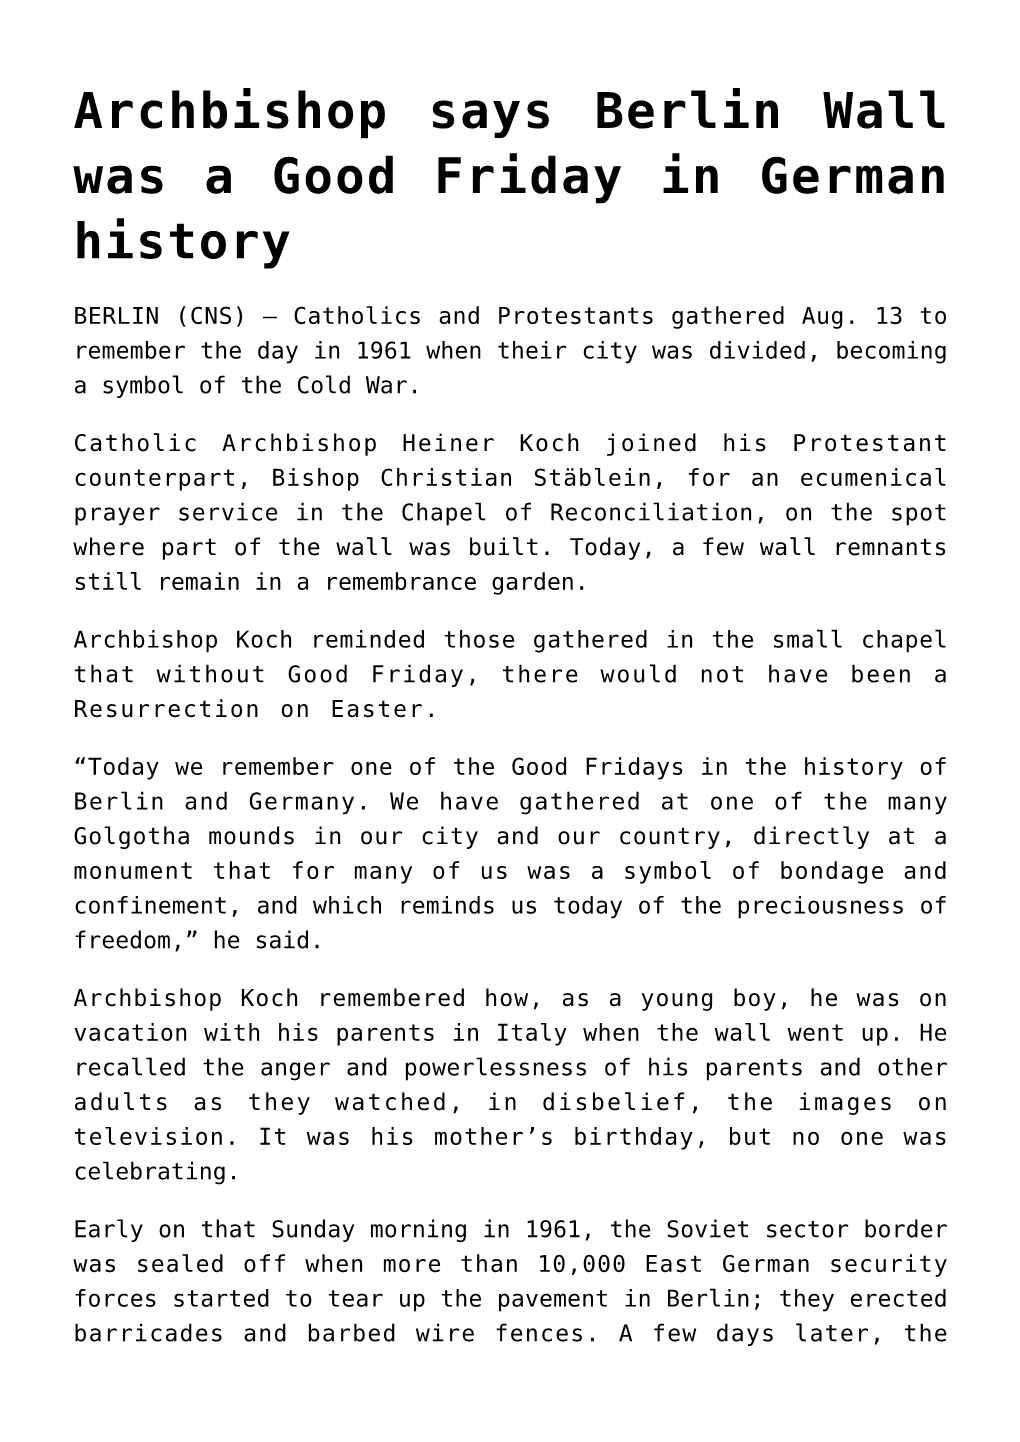 Archbishop Says Berlin Wall Was a Good Friday in German History